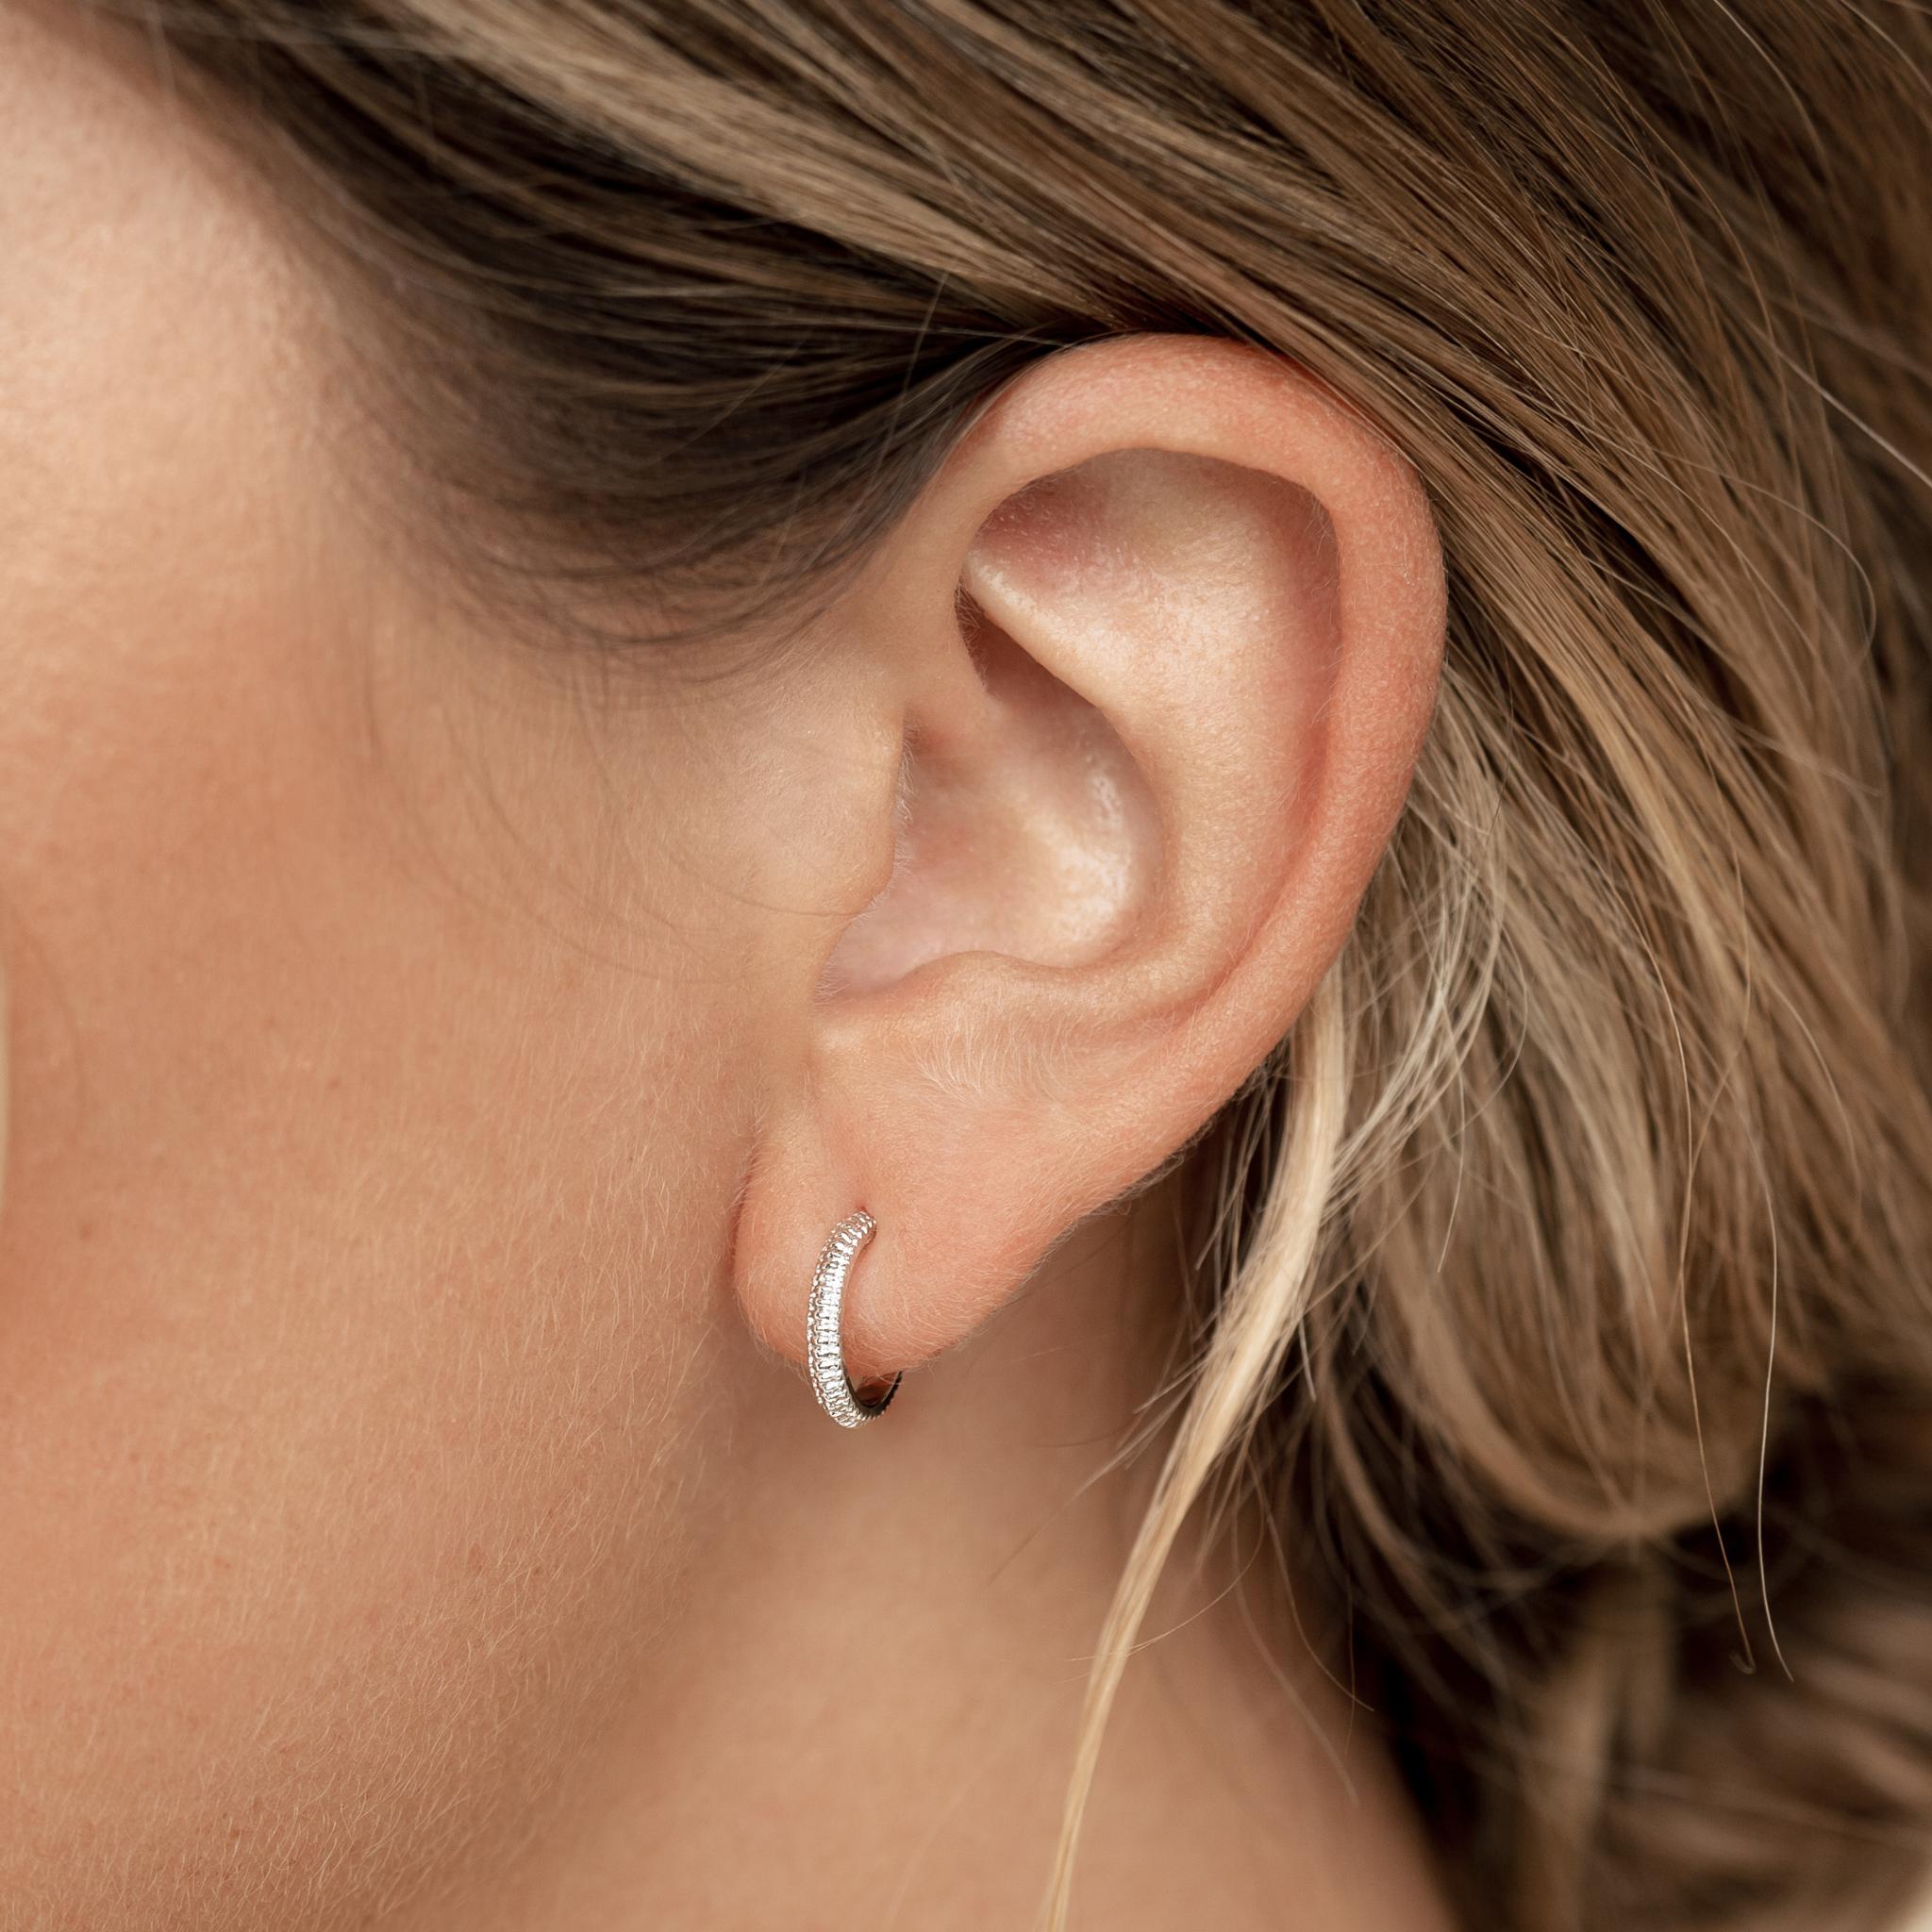 14k Yellow Gold Diamond Stud Earrings 2.5mm - Aria